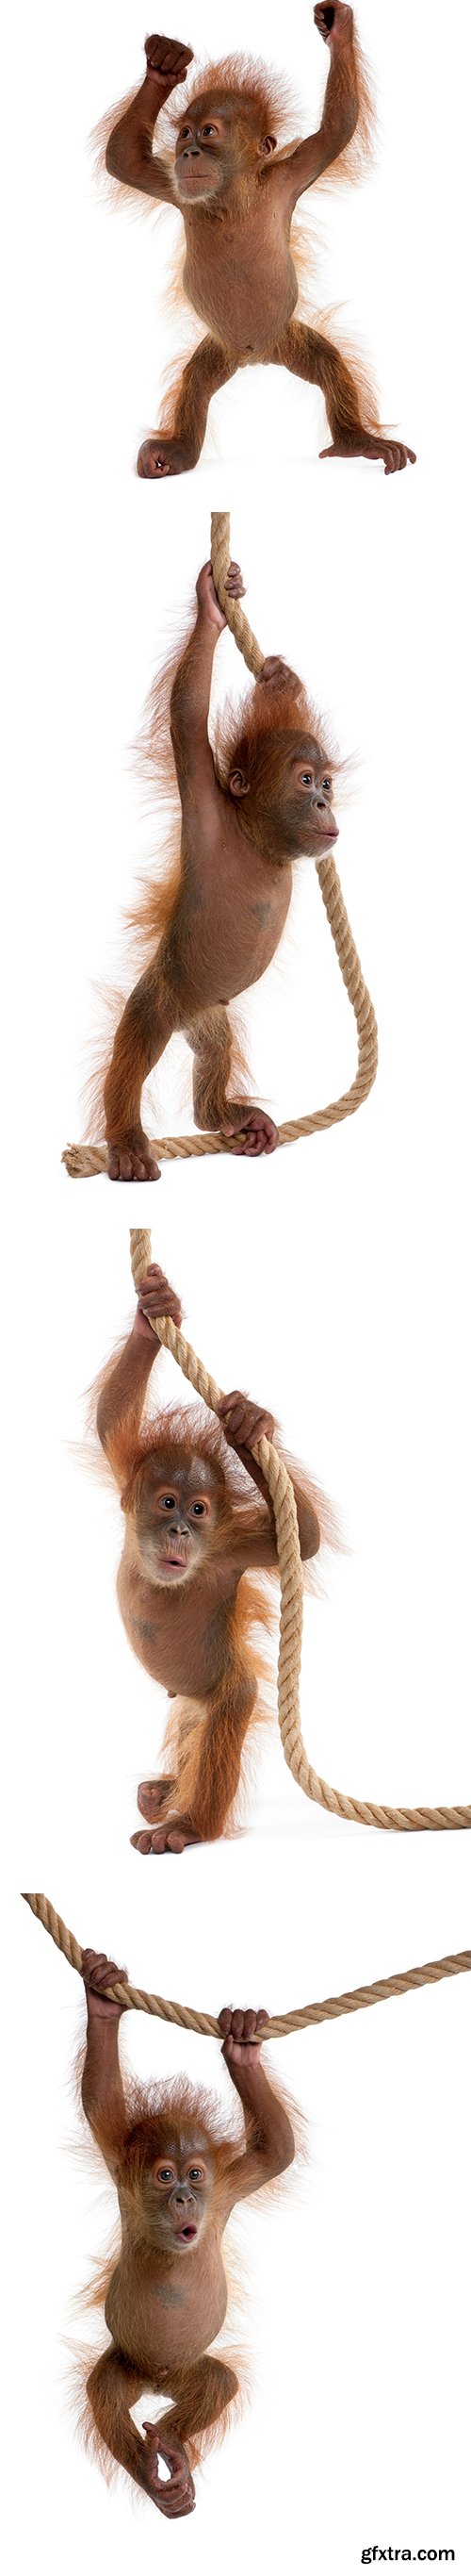 Baby Sumatran Orangutan Isolated - 12xJPGs